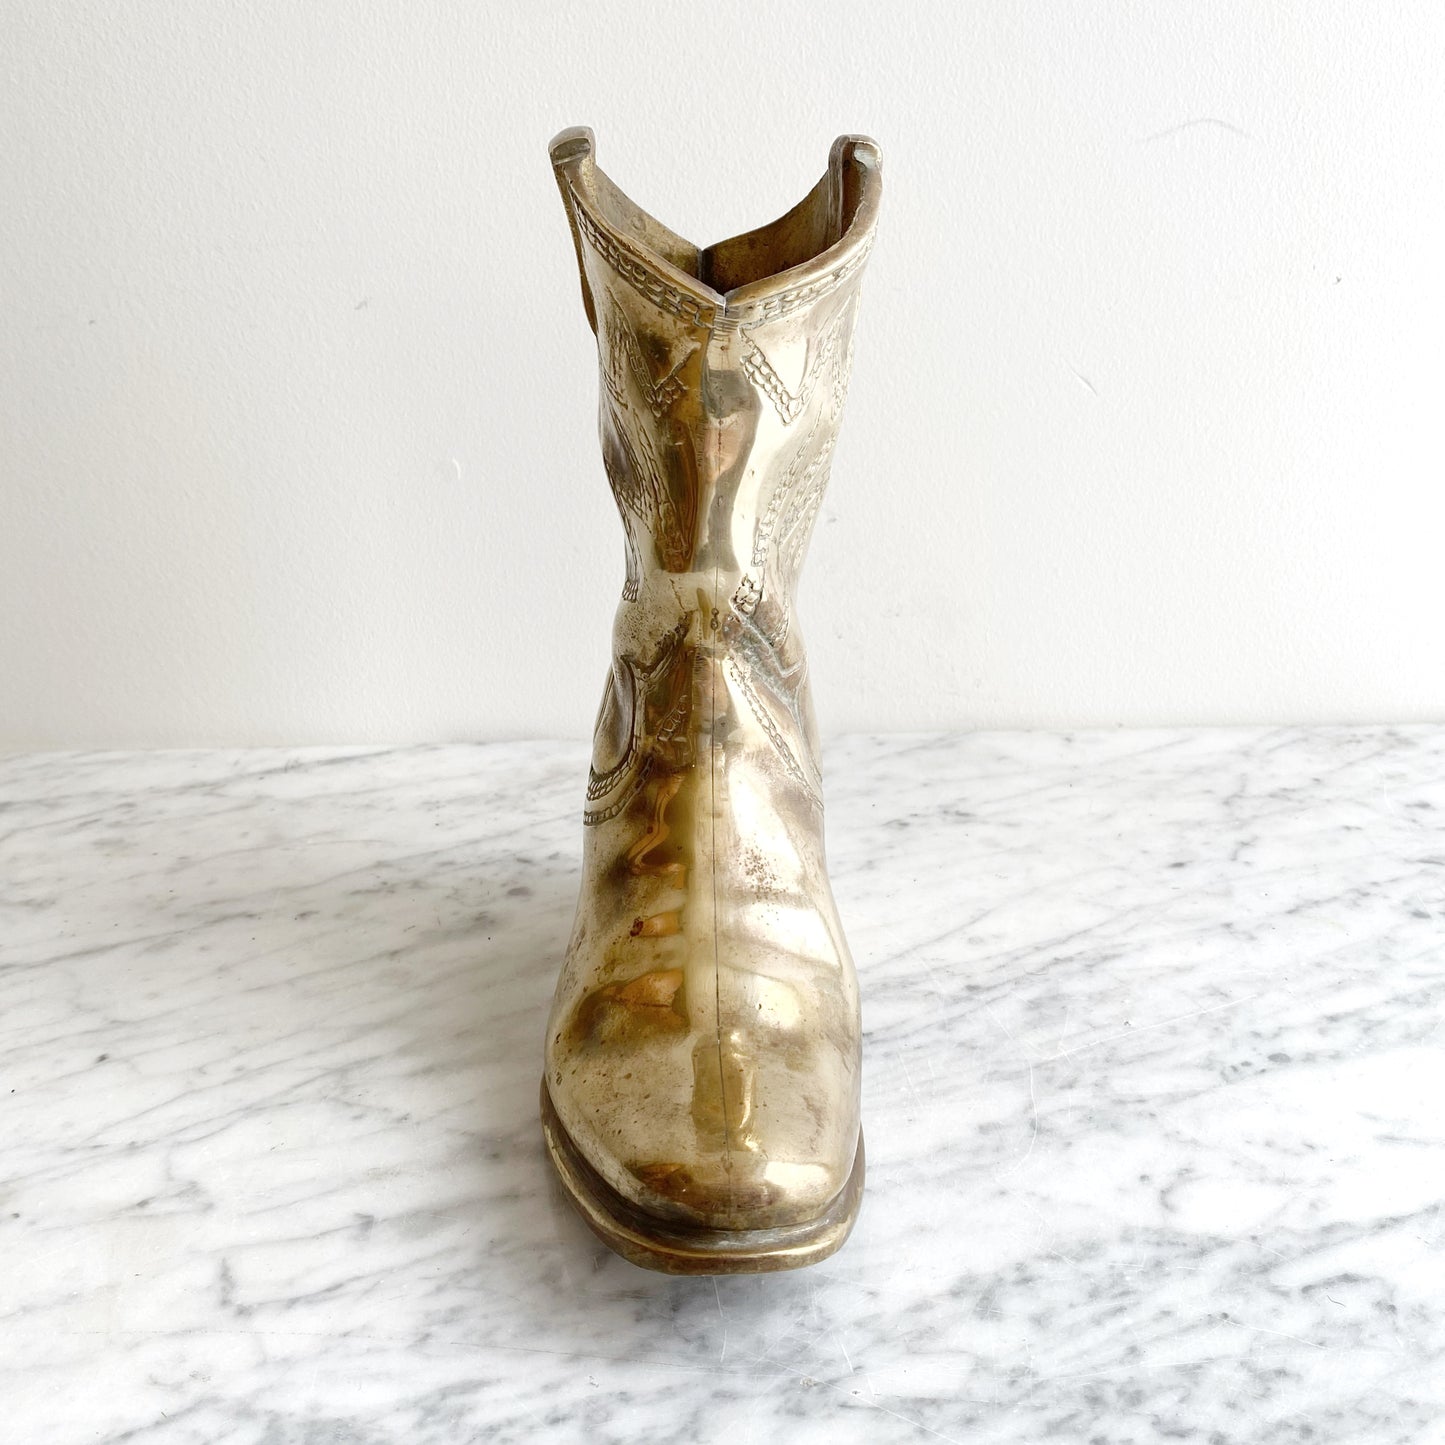 XL Vintage Brass Cowboy Boot, 9.5"